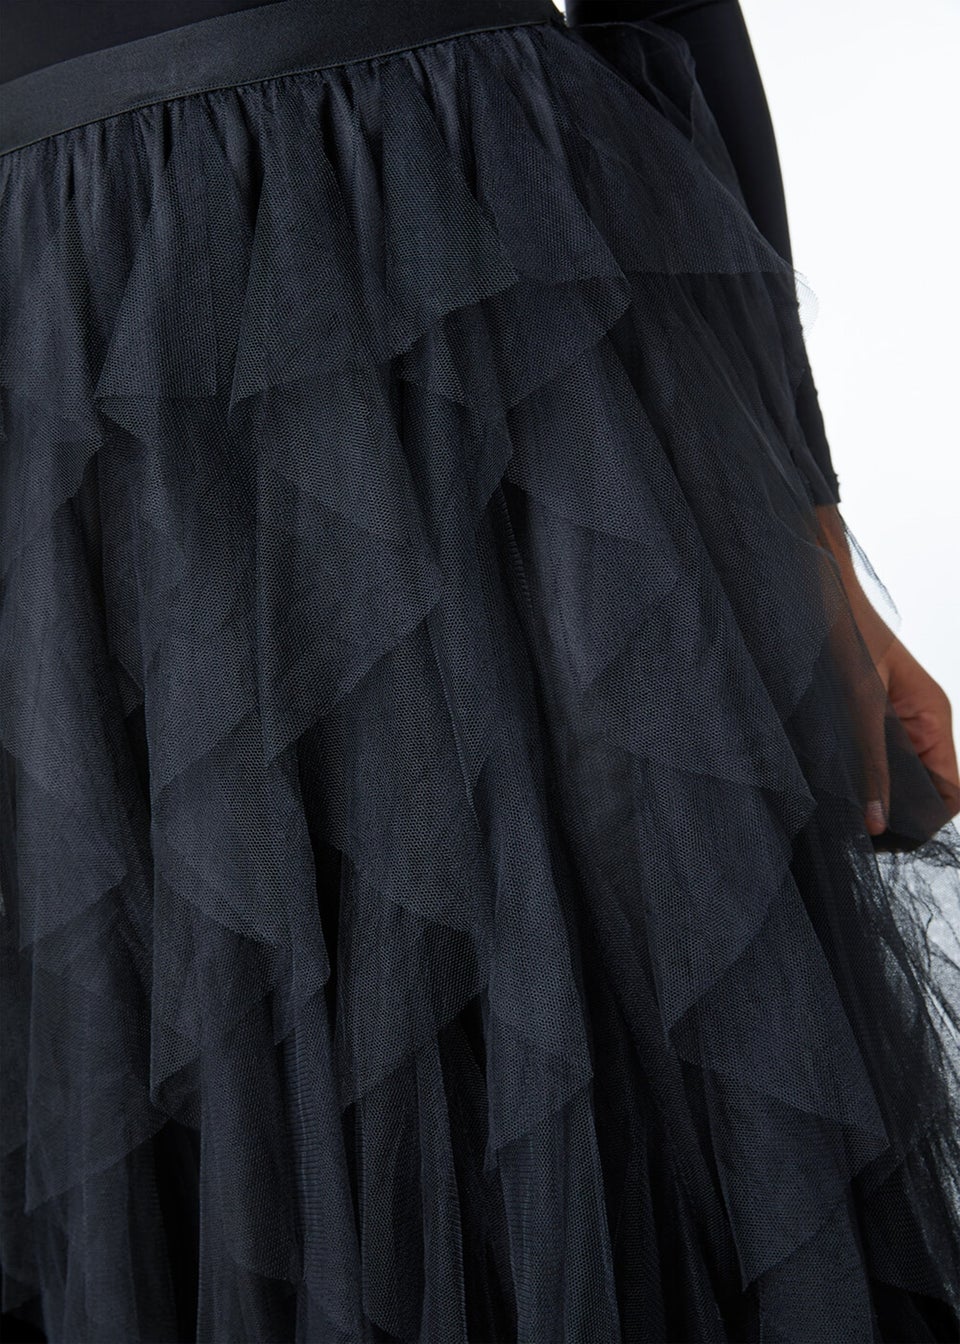 Roman Black Elasticated Mesh Layered Skirt